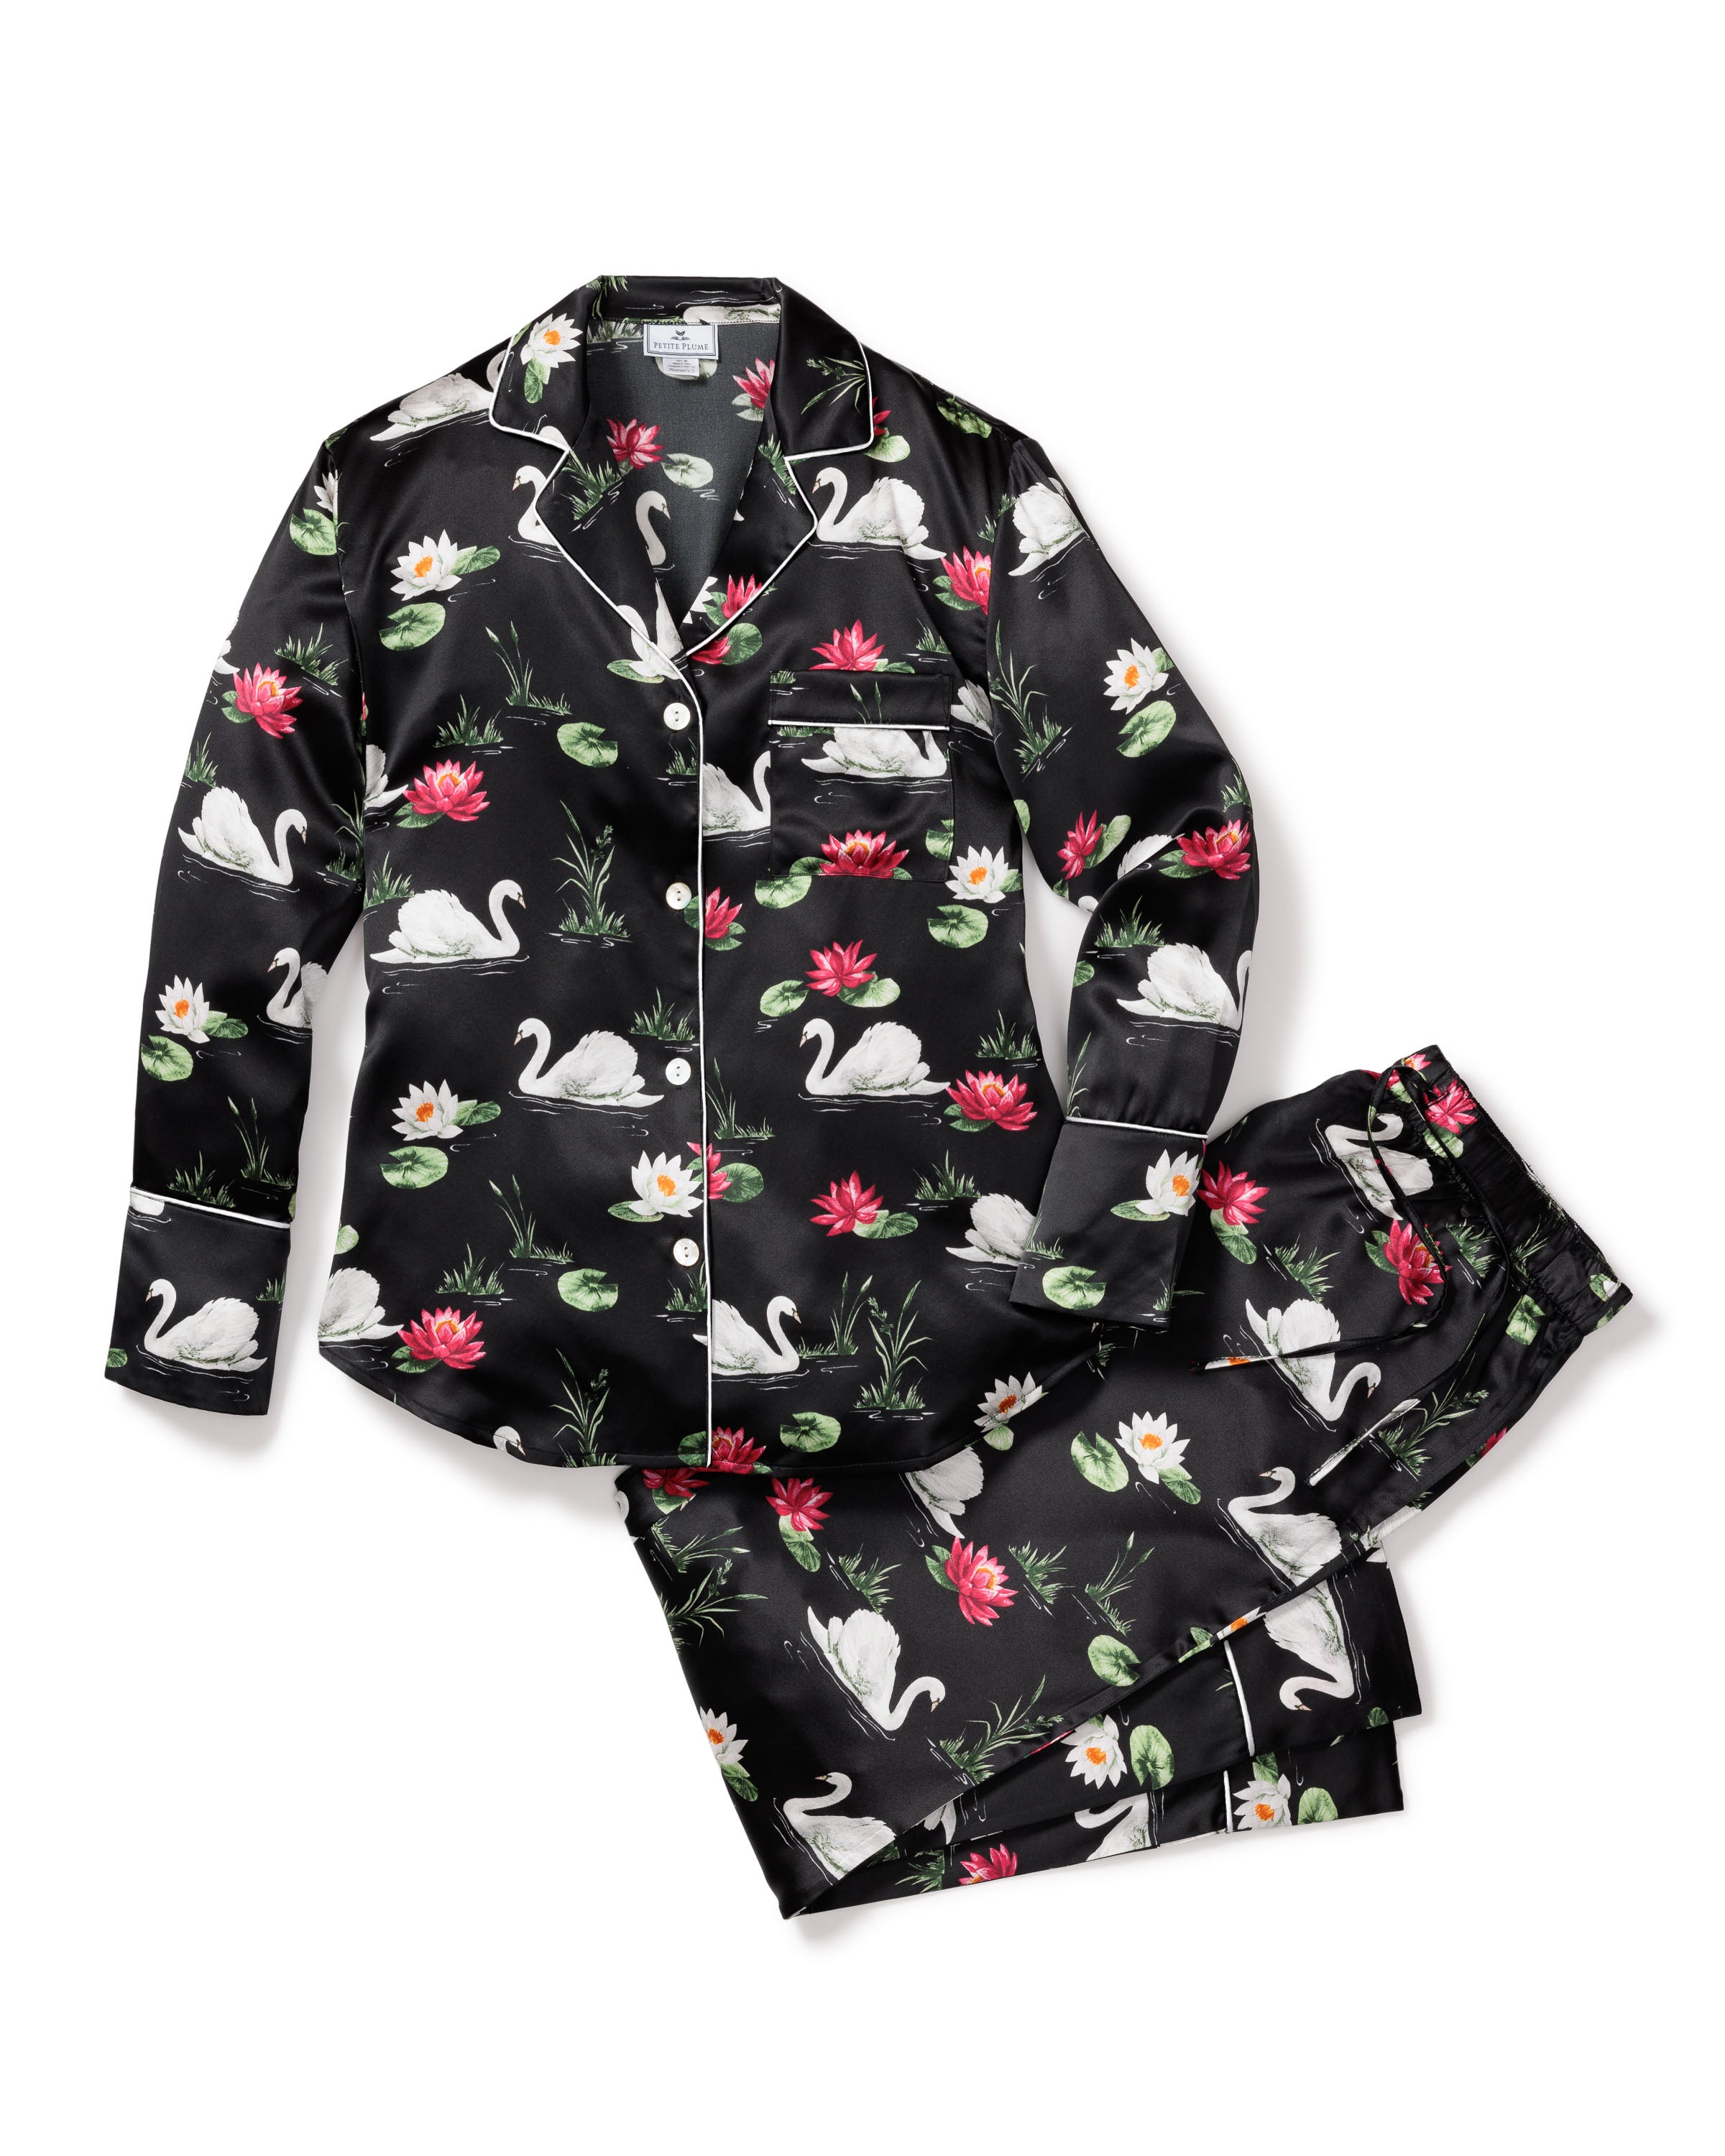 Woman Within Pajamas Set satin floral pjs pants top Size 3 X elastic waist  Women